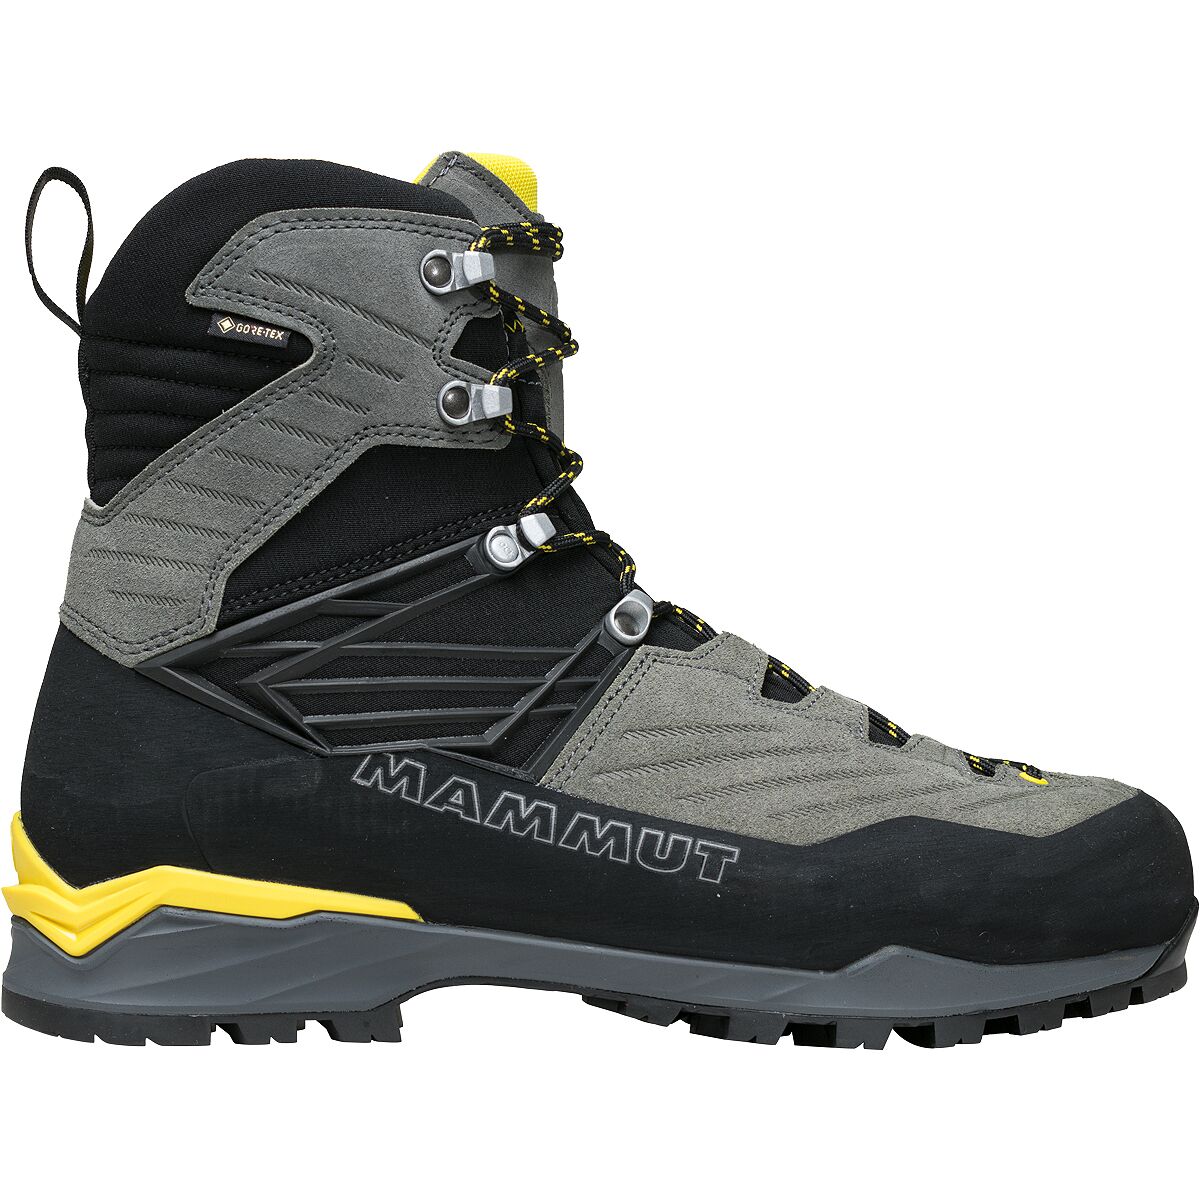 Kento Pro High GTX Mountaineering Boot - Men